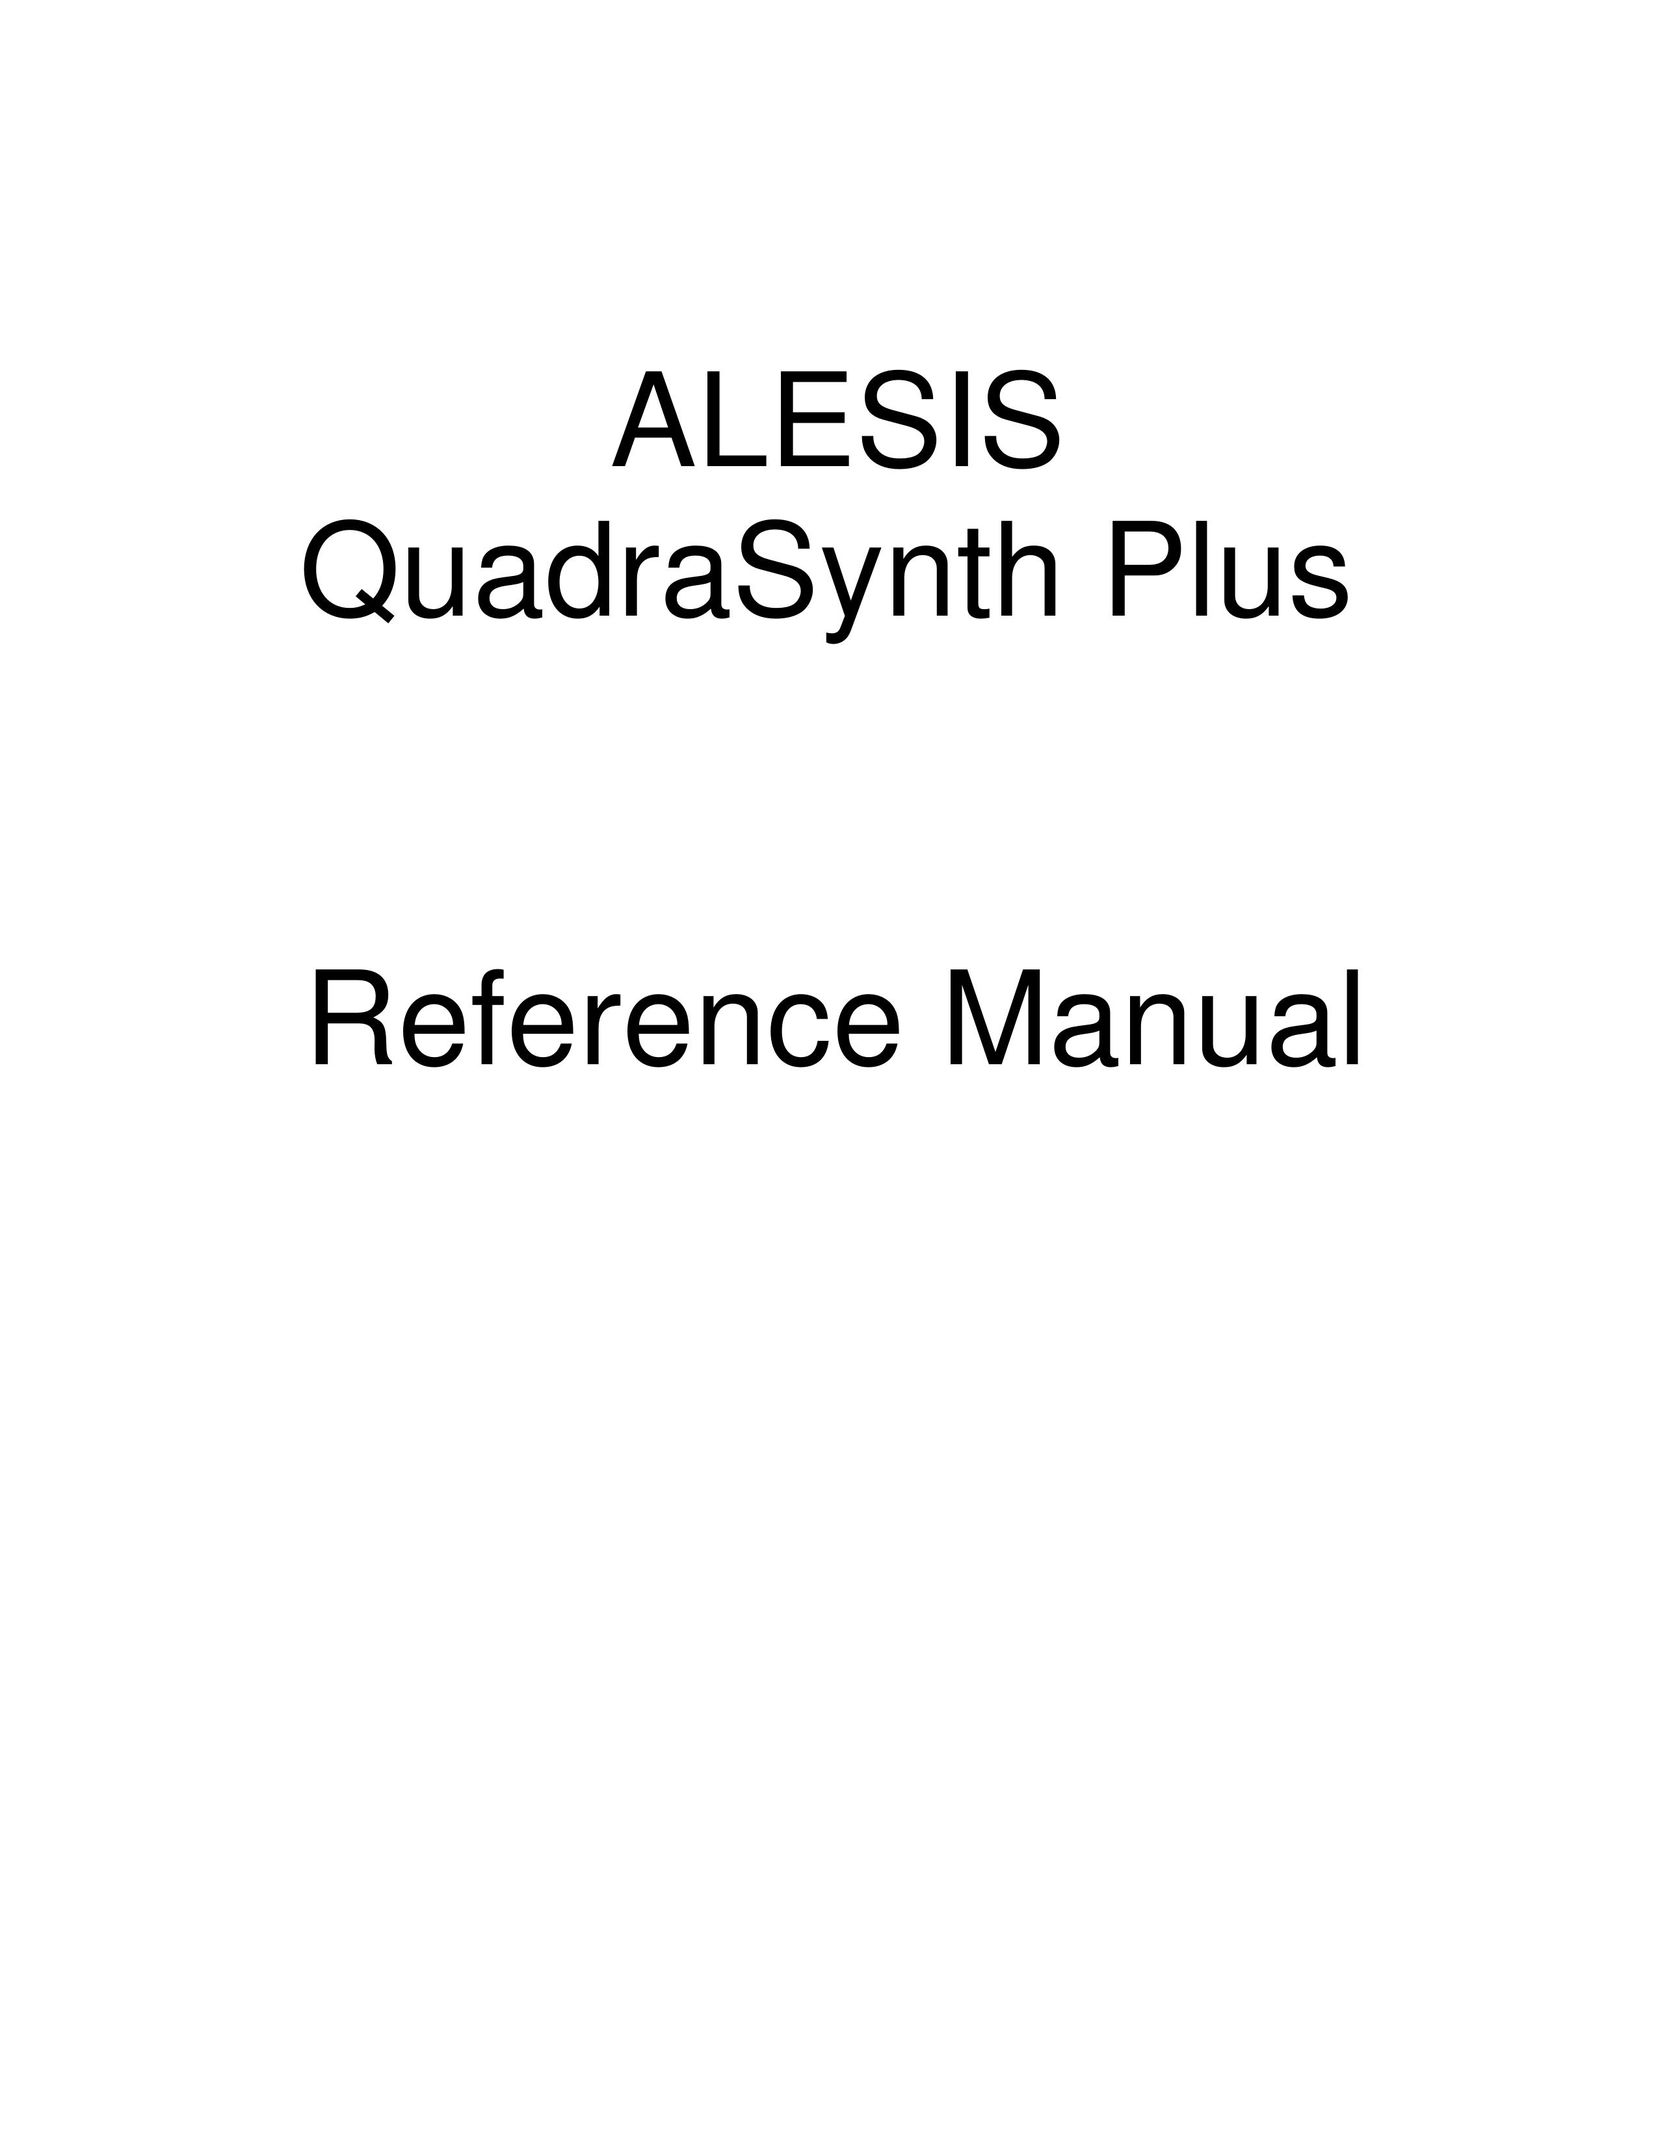 Alesis QuadraSynth Plus Car Speaker User Manual